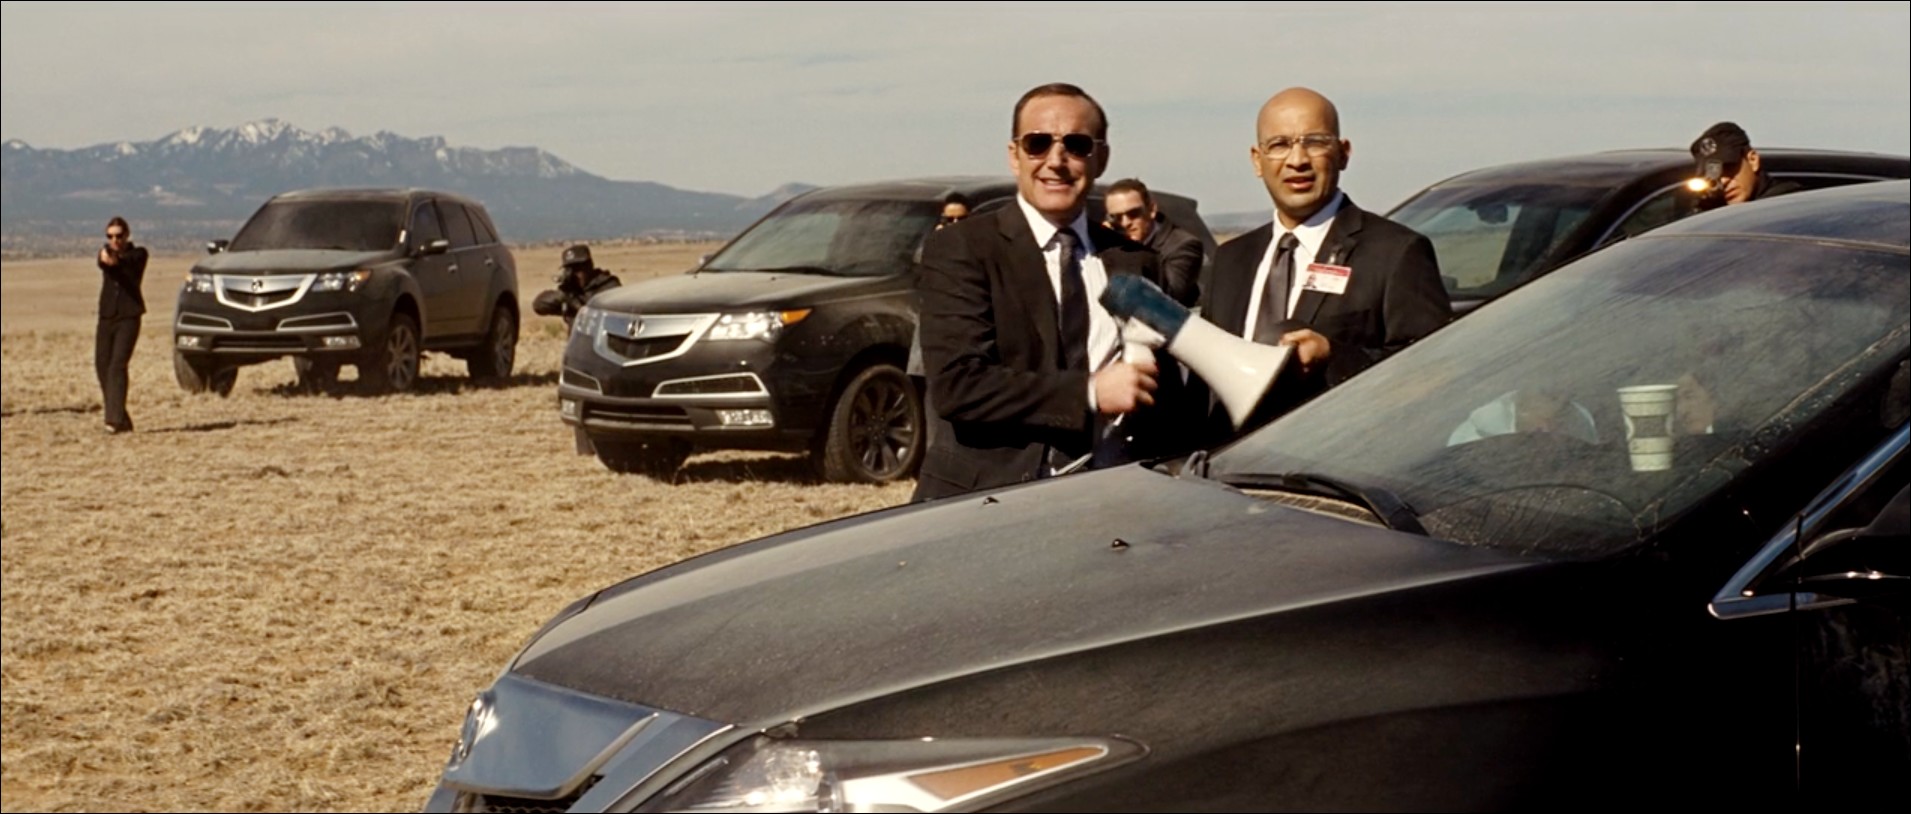 Phil Coulson et l'agent Sitwell du S.H.I.E.L.D dans le film MARVEL Thor